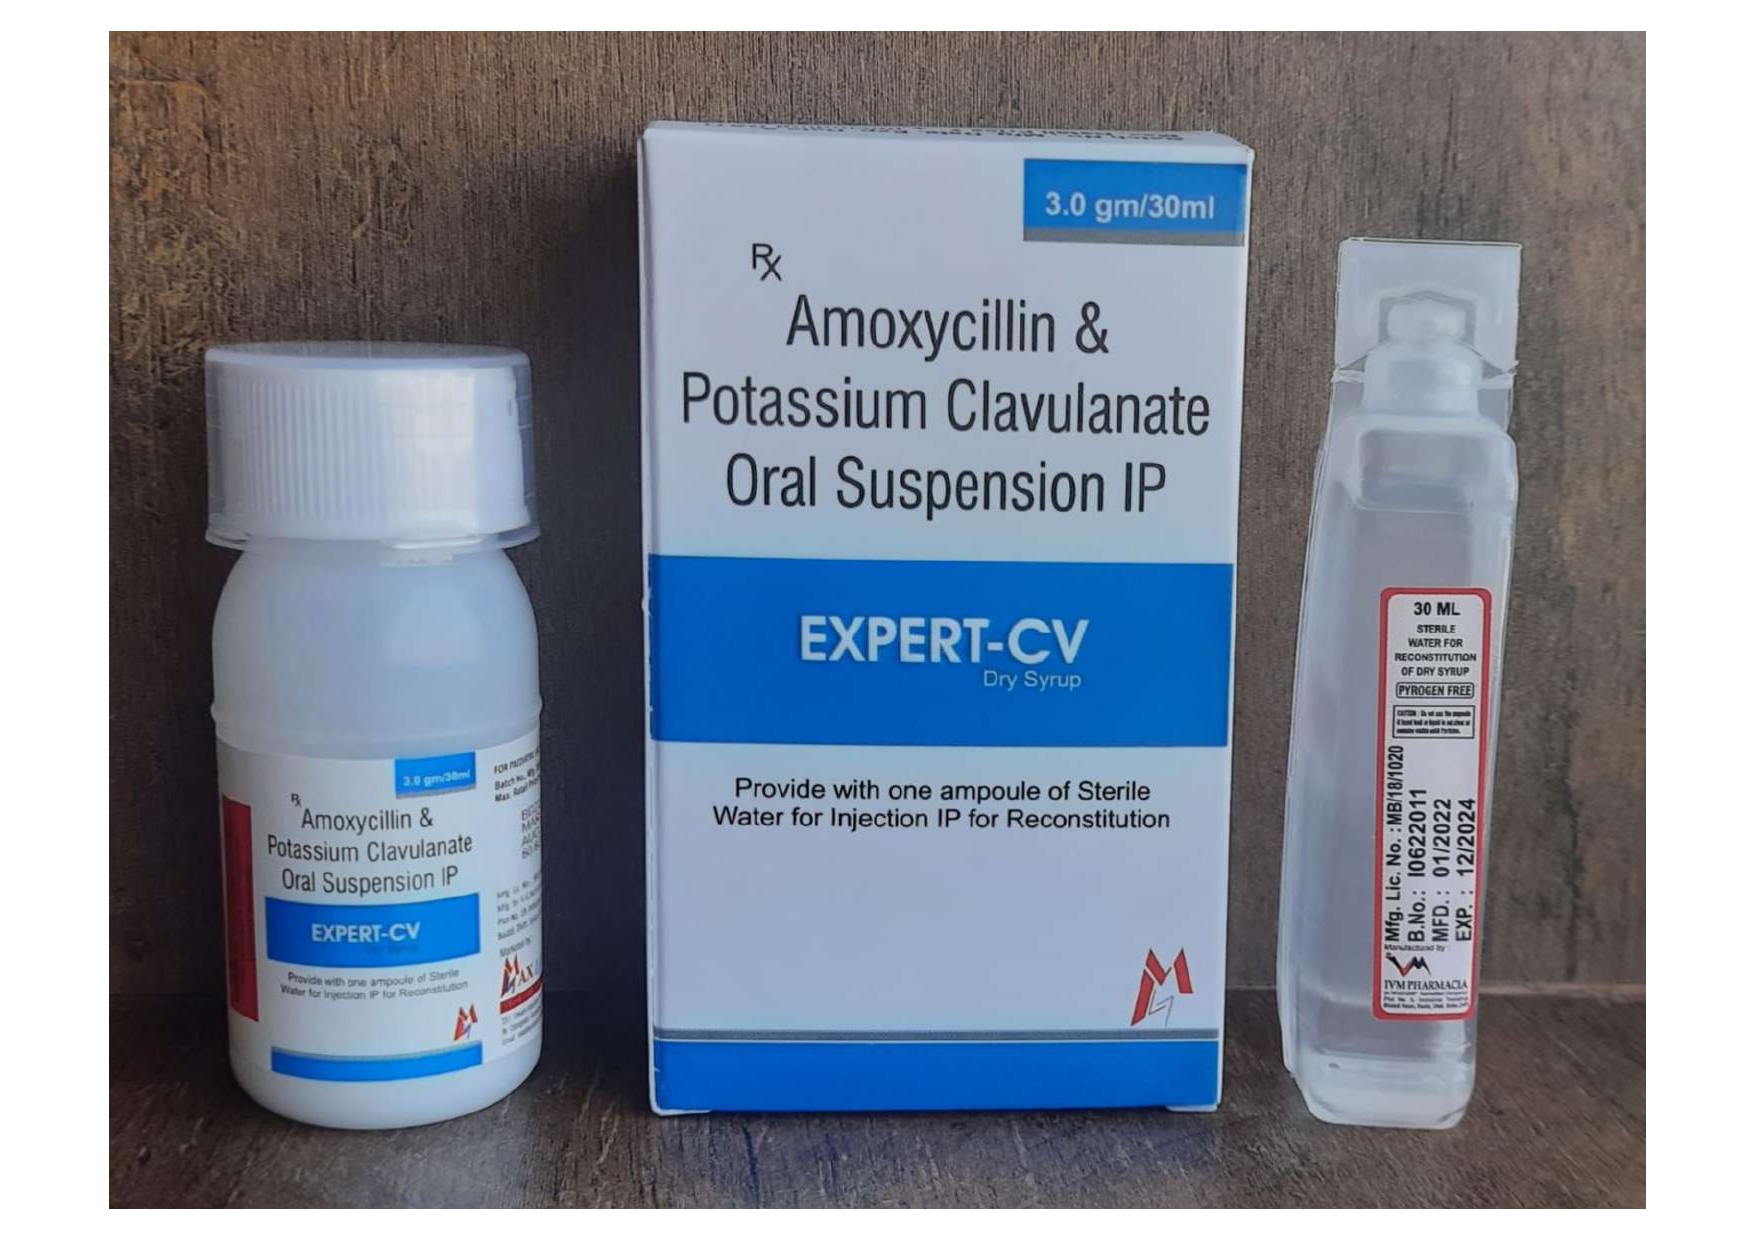 amoxycillin 200mg + clavulanic acid 28.5 mg
with wfi